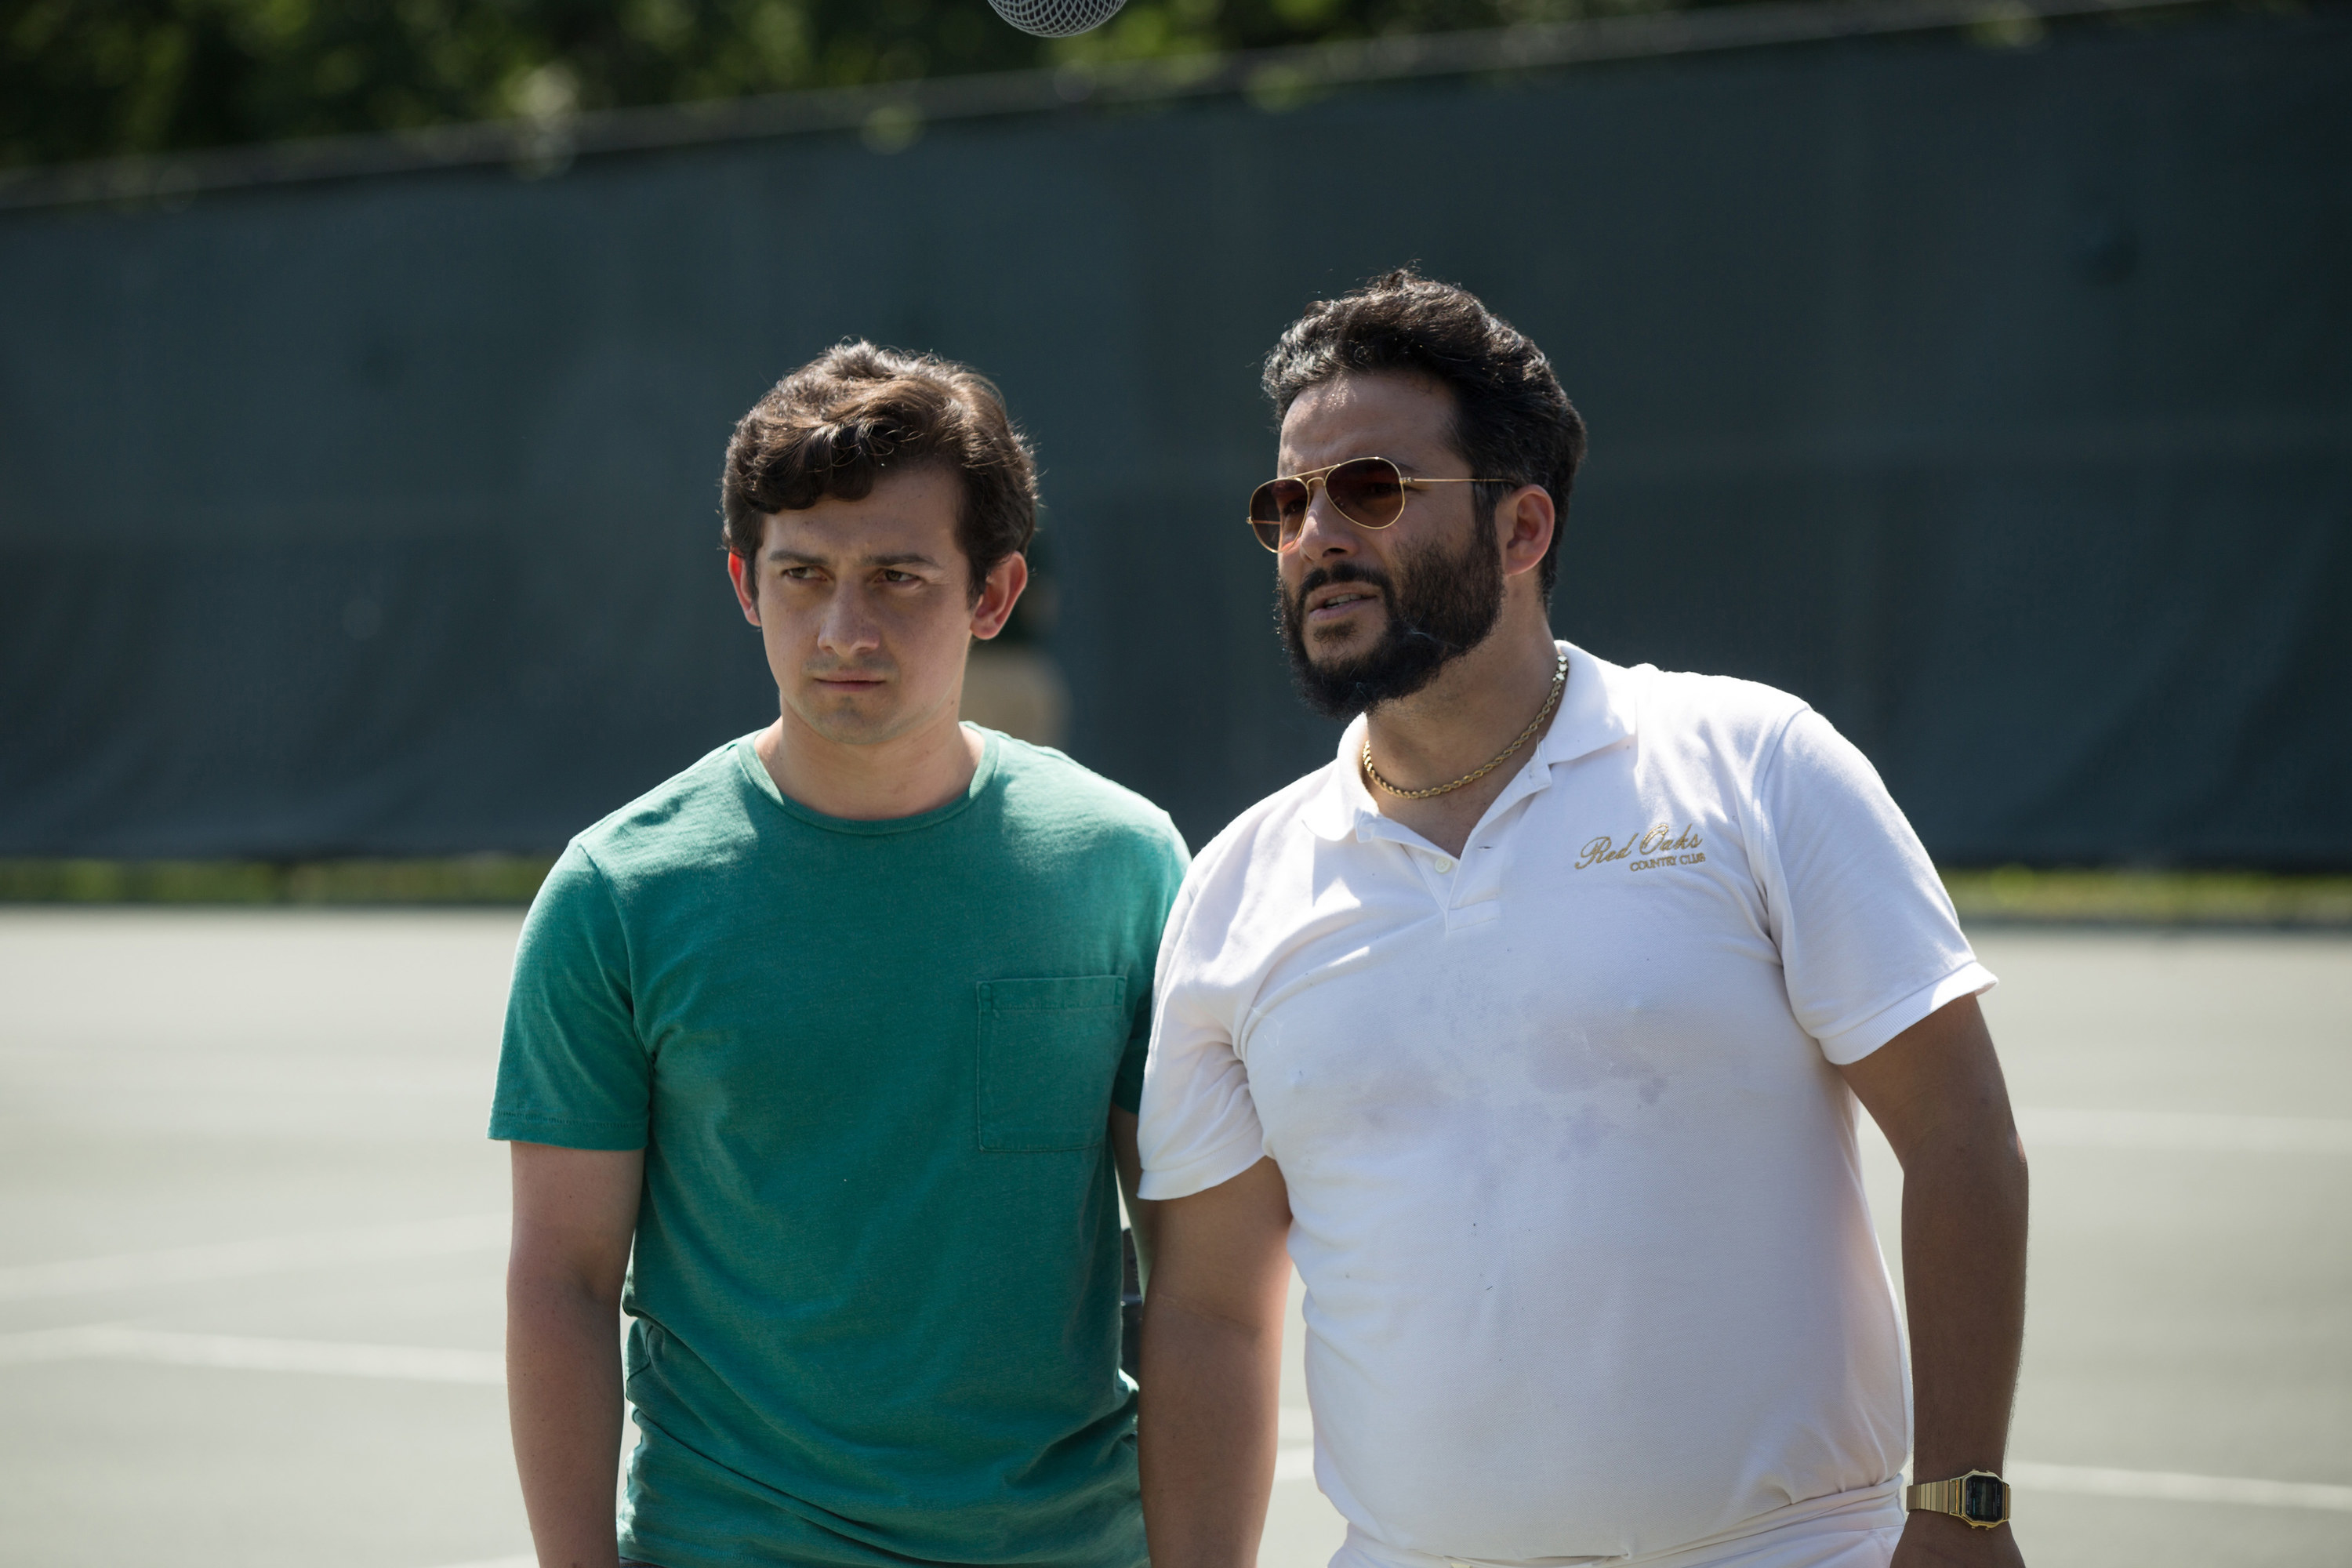 Craig Roberts and Ennis Esmer stand on a tennis court